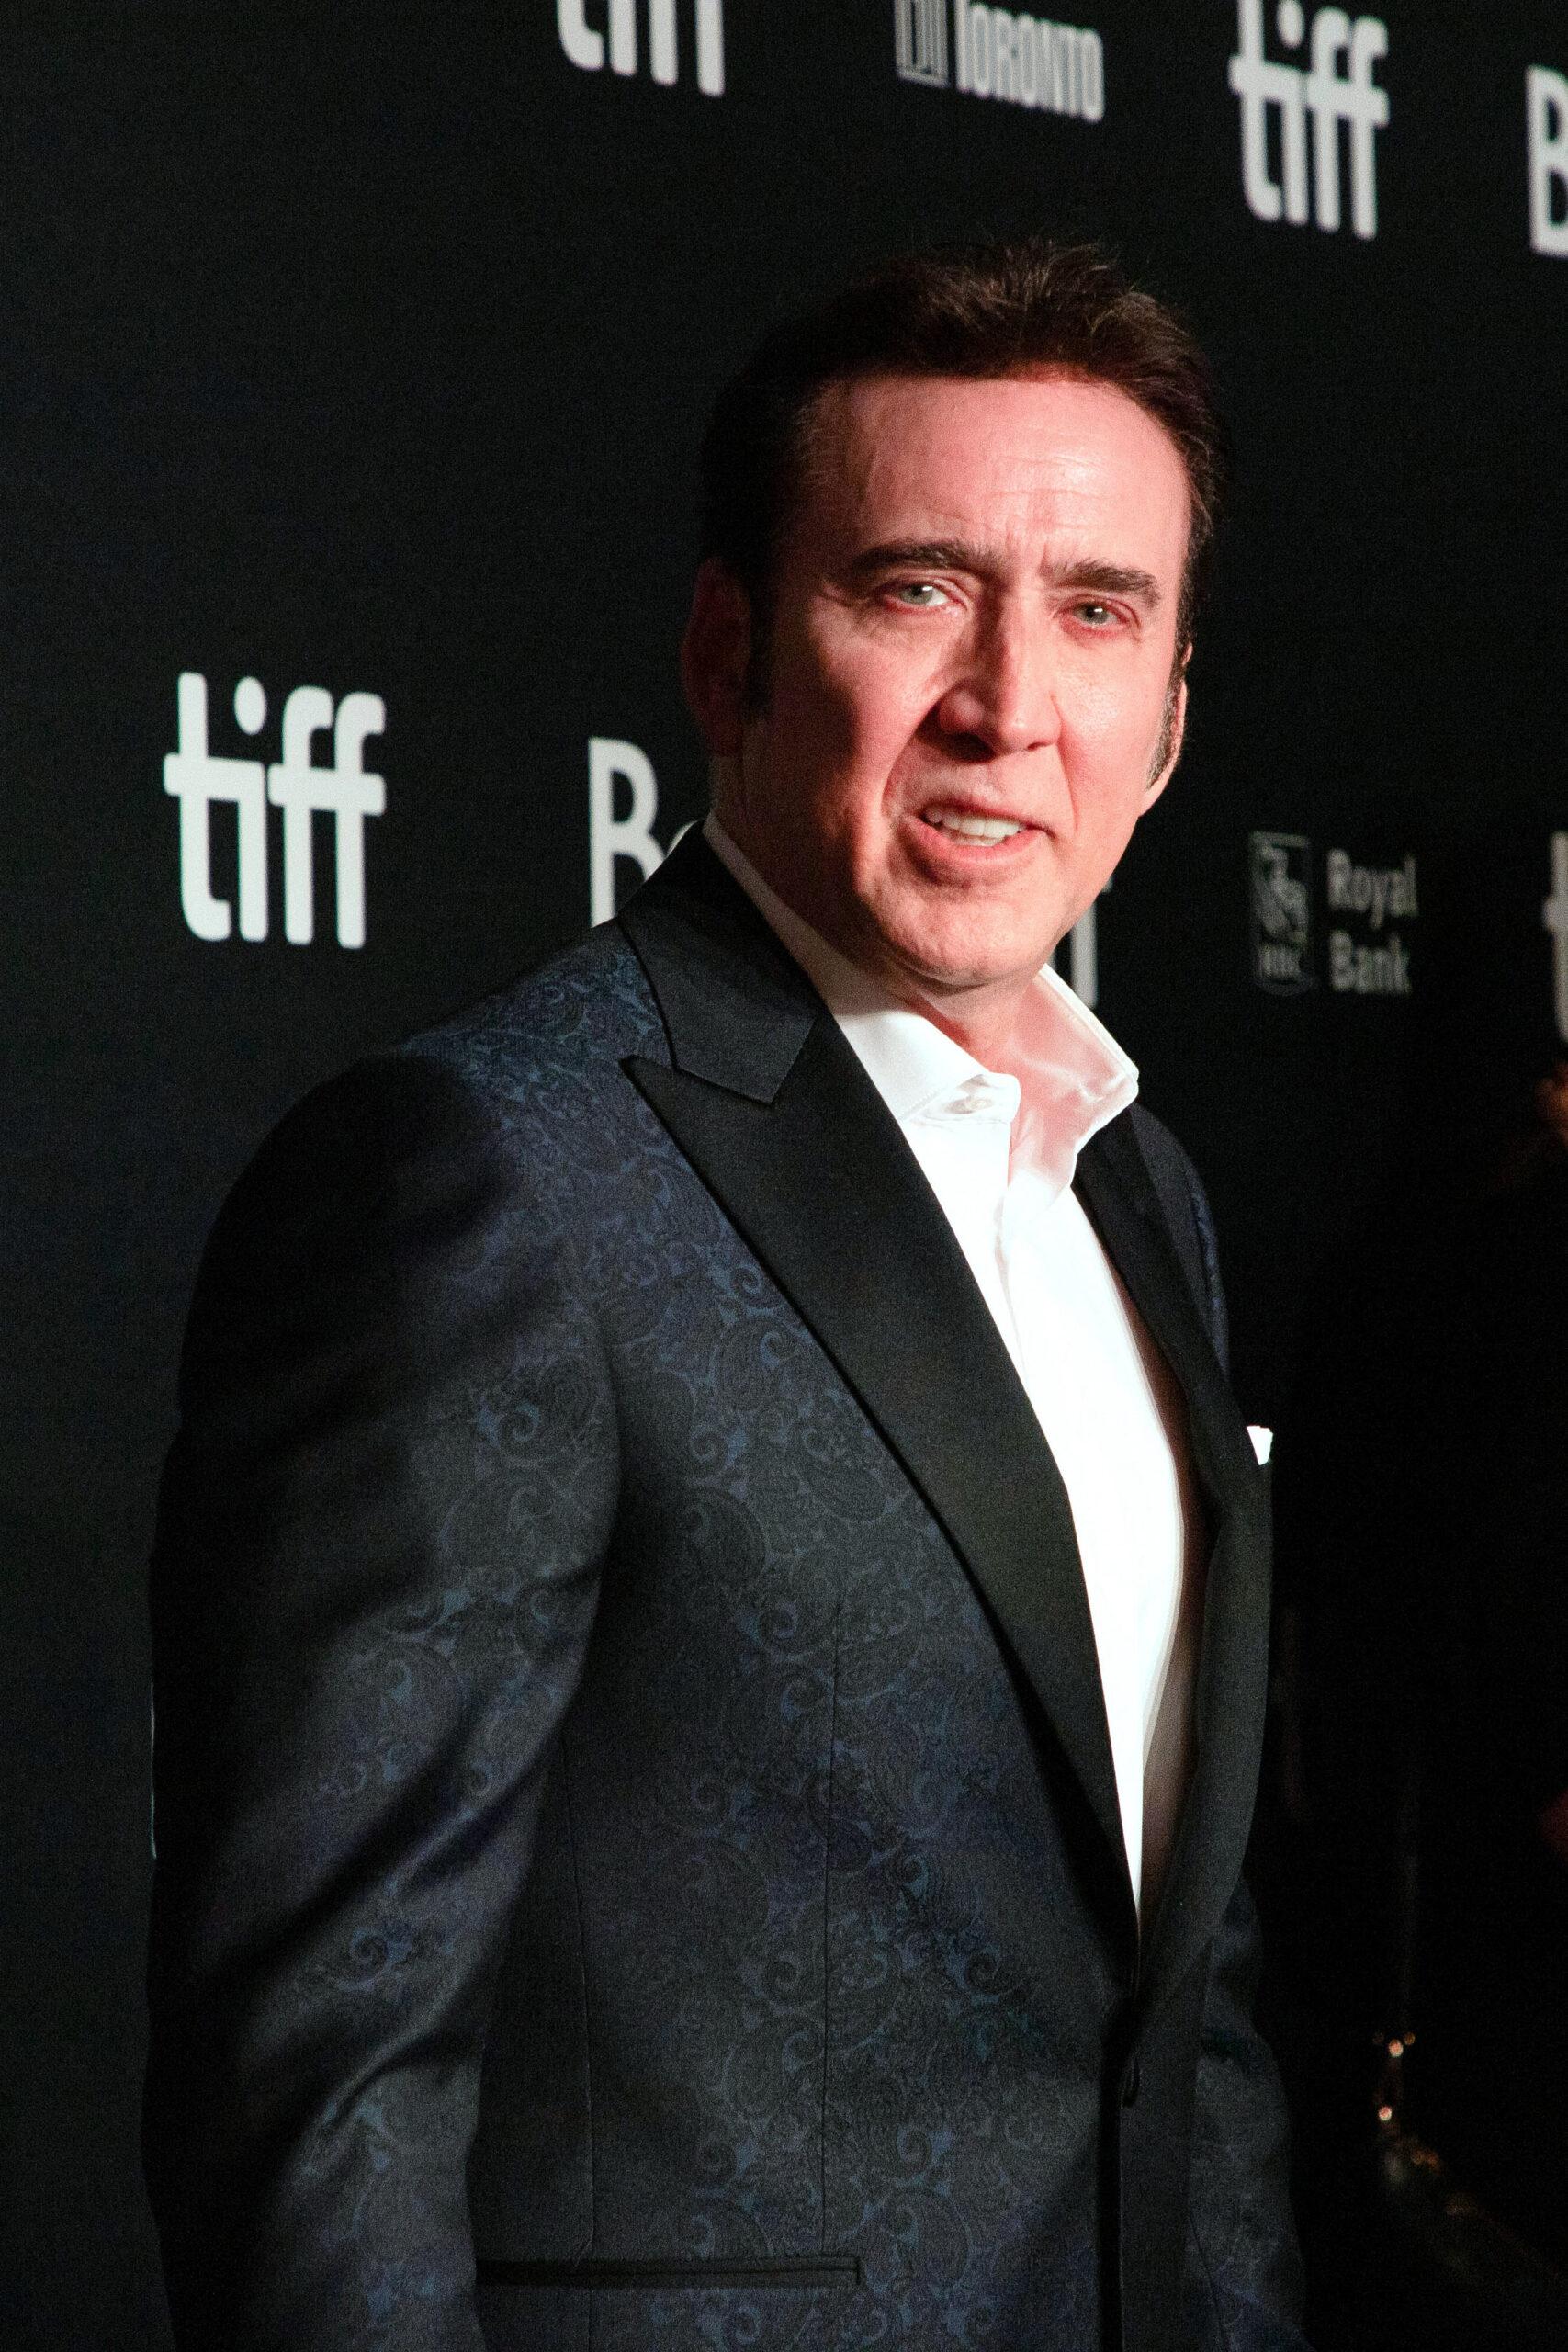 Nicolas Cage at the 2022 Toronto International Film Festival - "Butcher's Crossing" Premiere